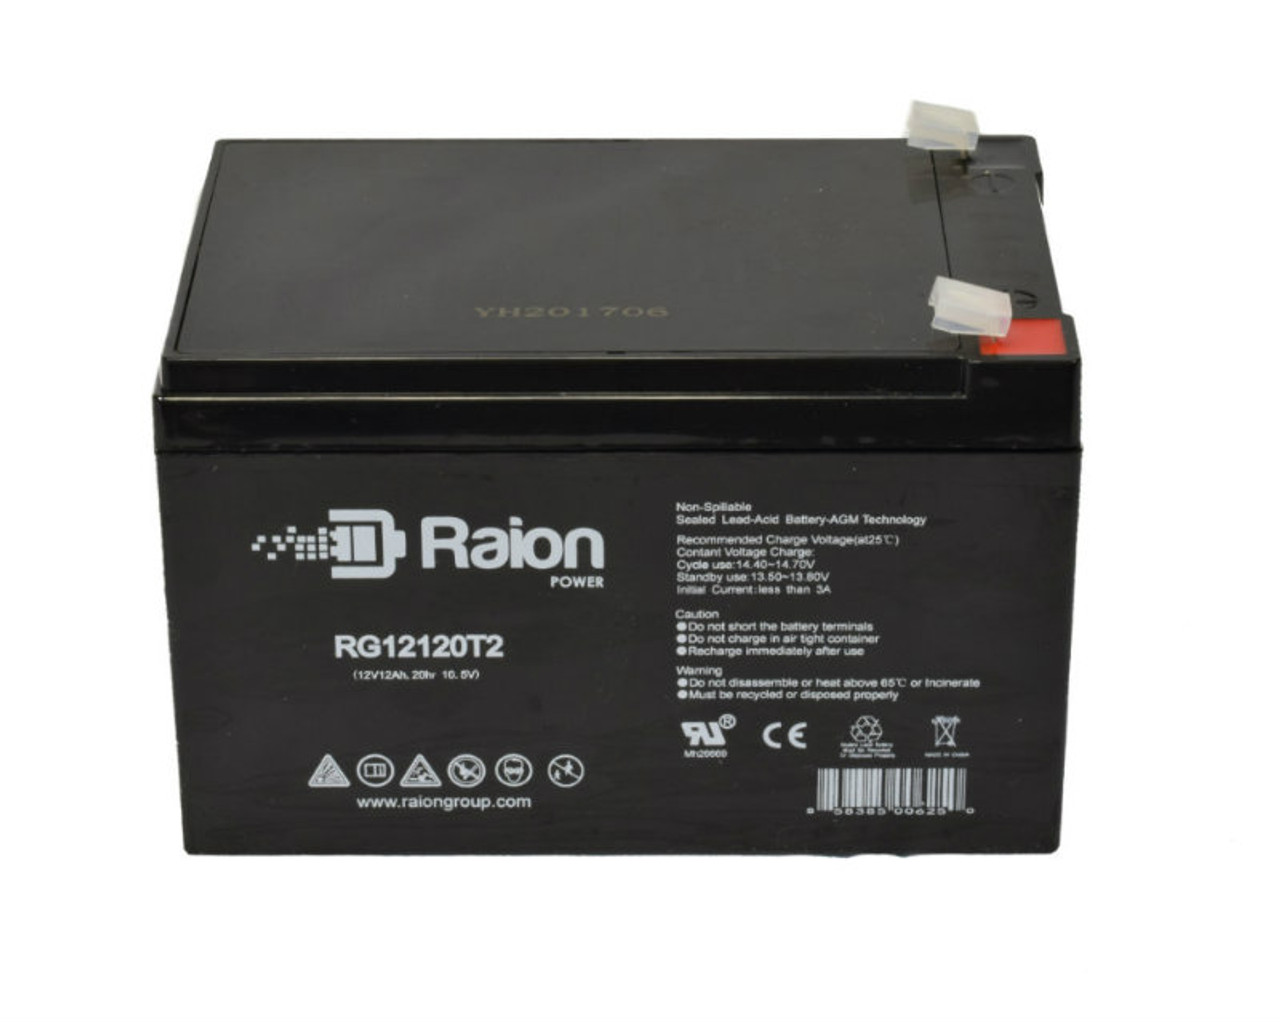 Raion Power RG12120T2 SLA Battery for Union Battery MX-12120